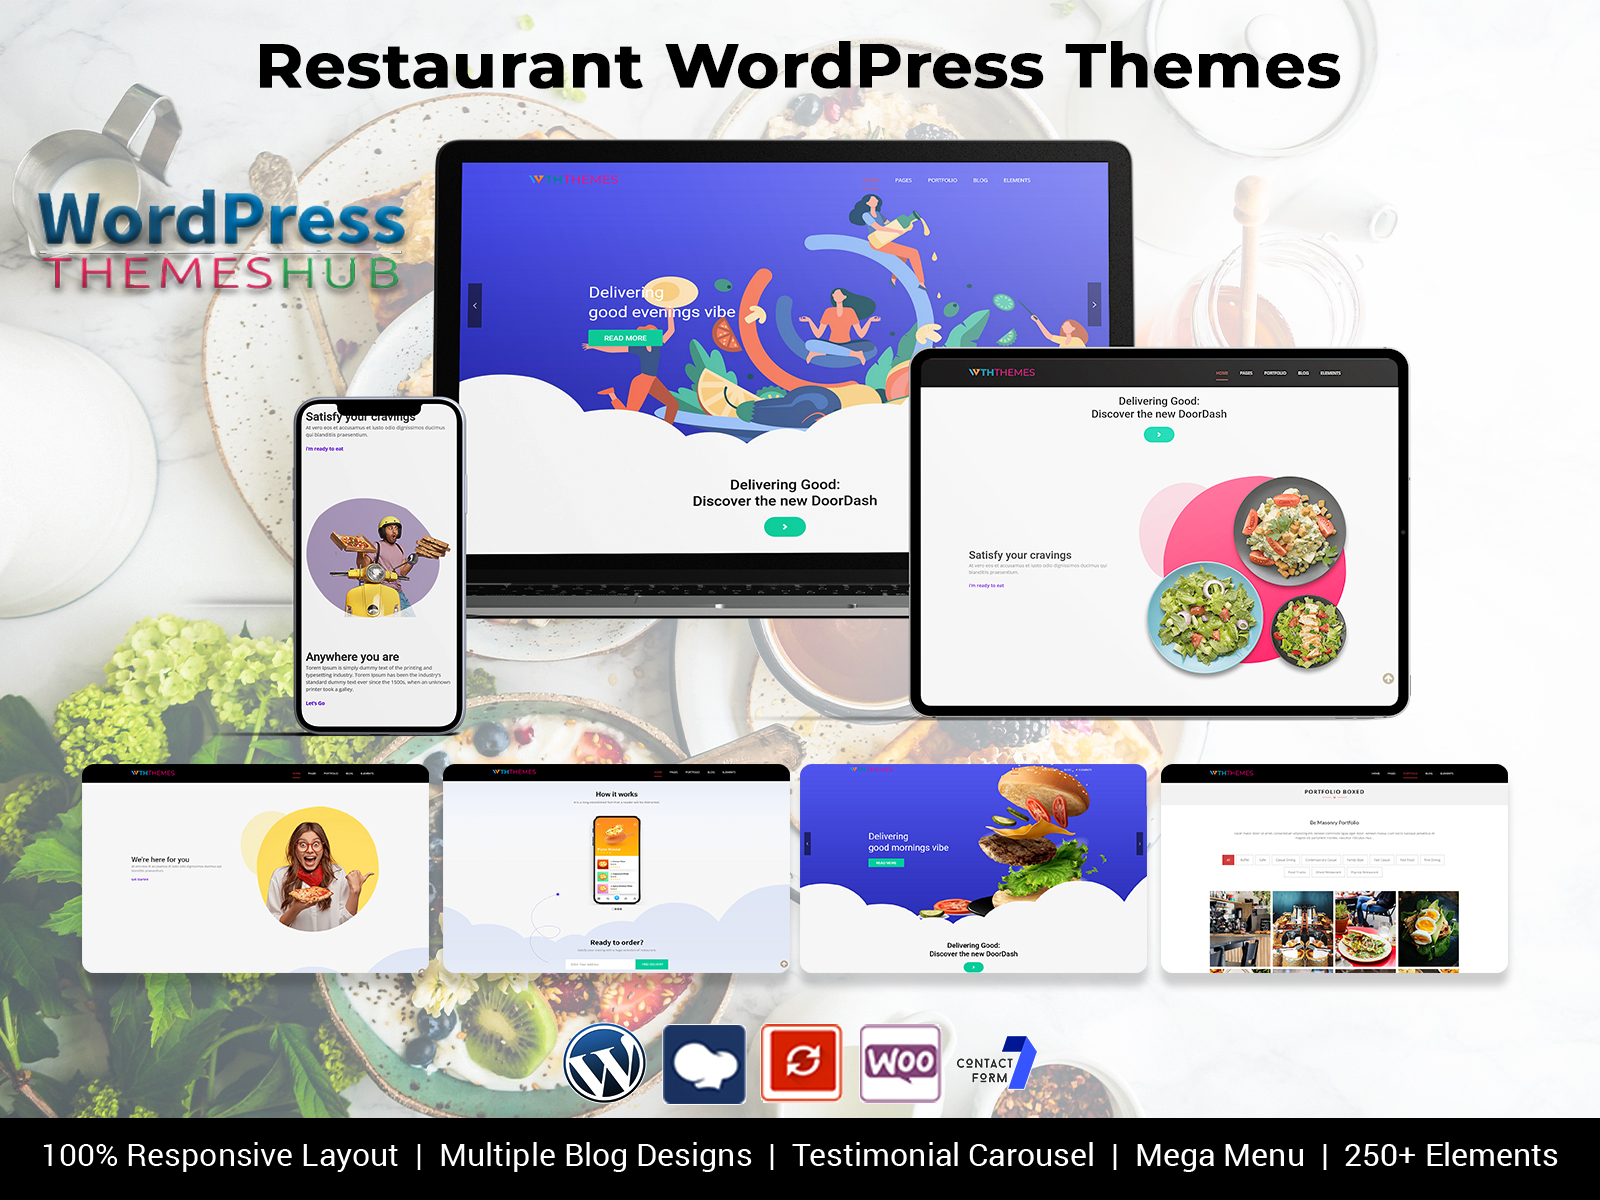 Restaurant WordPress Theme To Make Business Website